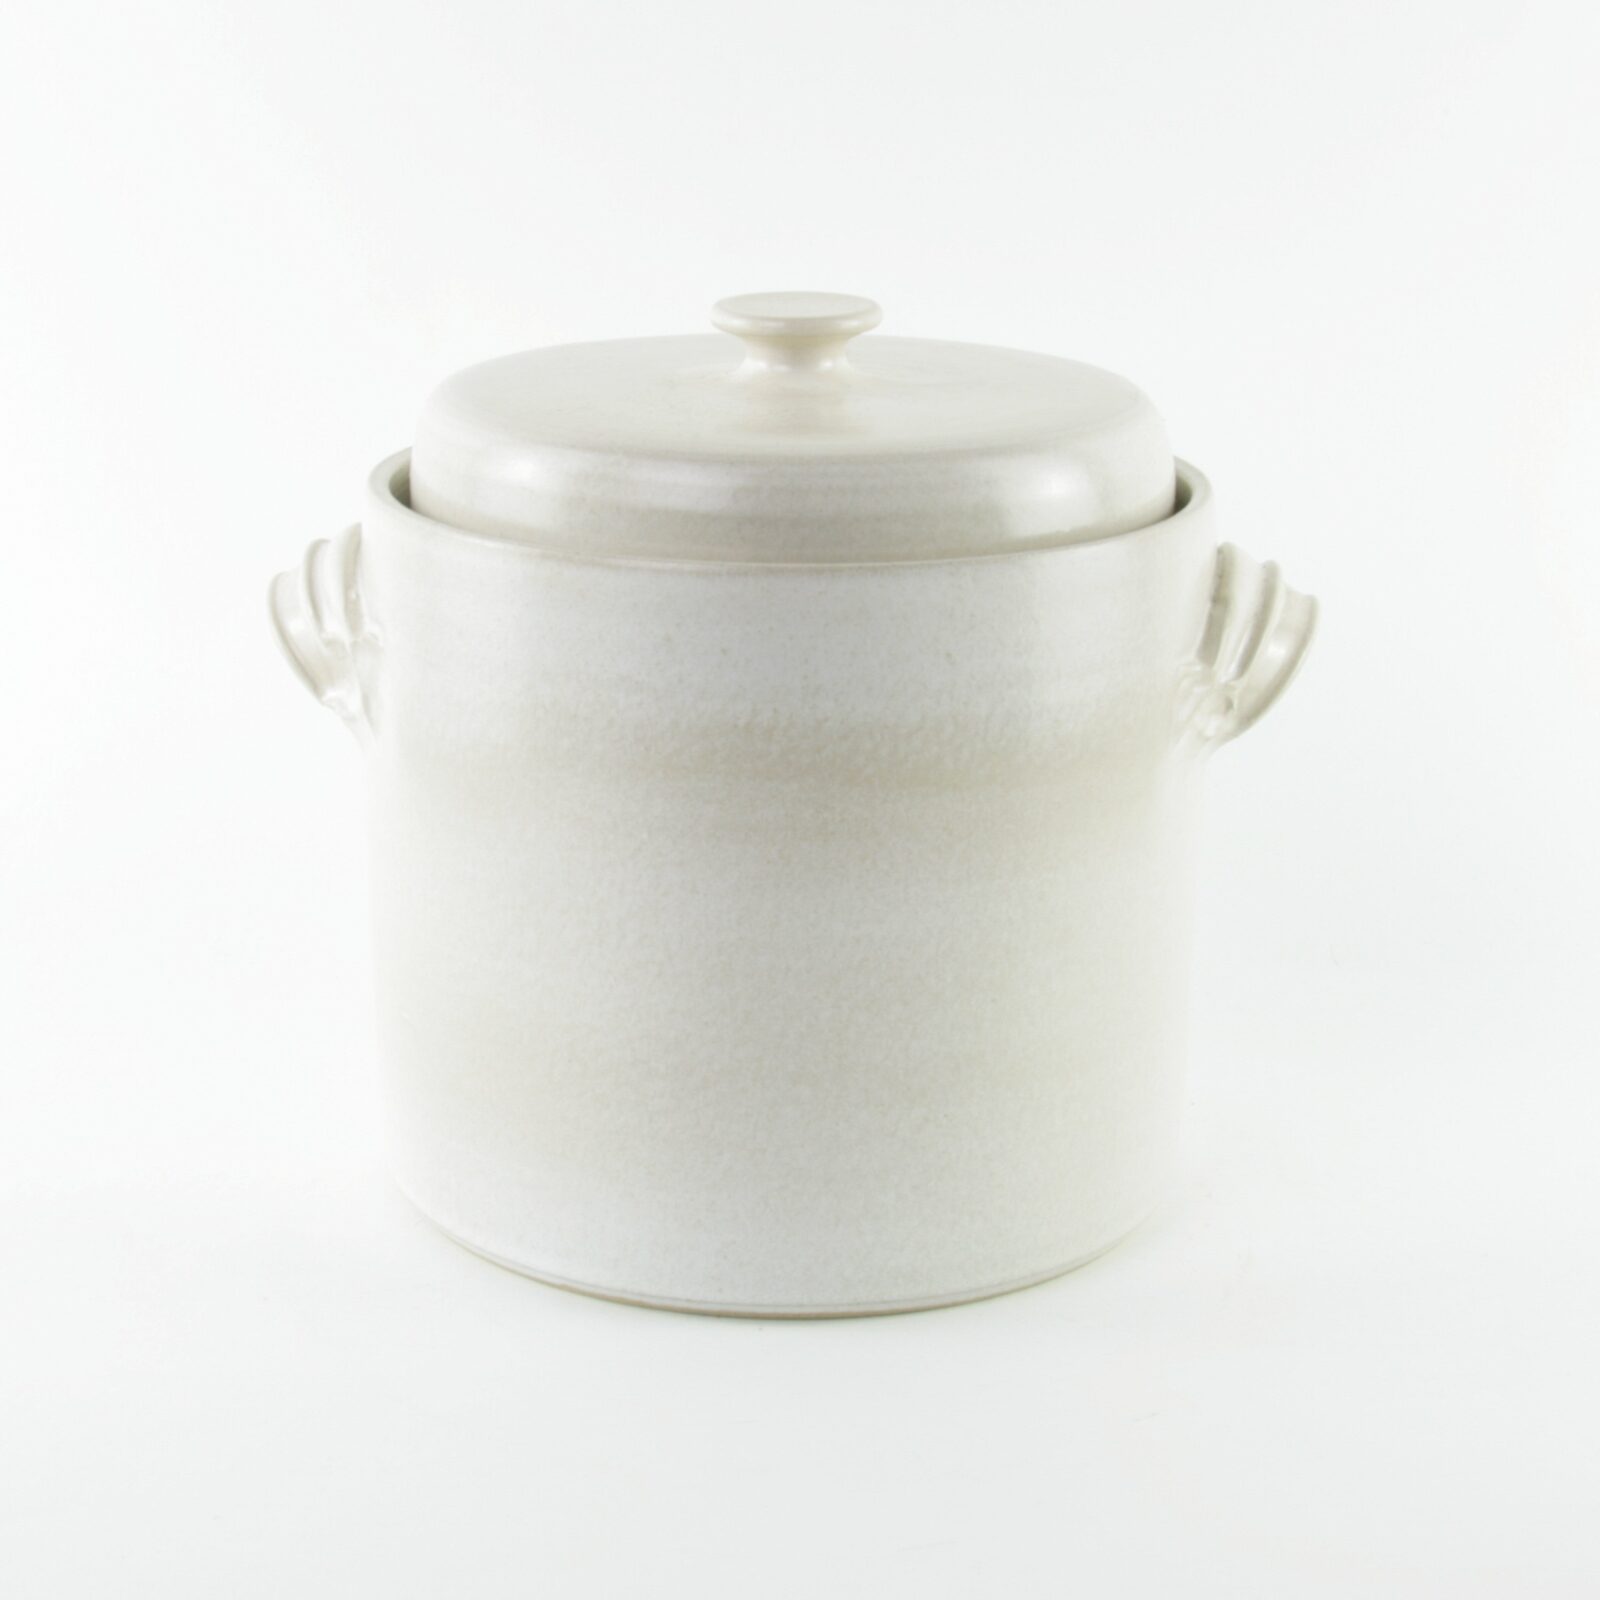 2 litre handmade ceramic sauerkraut crock in white with weight stones